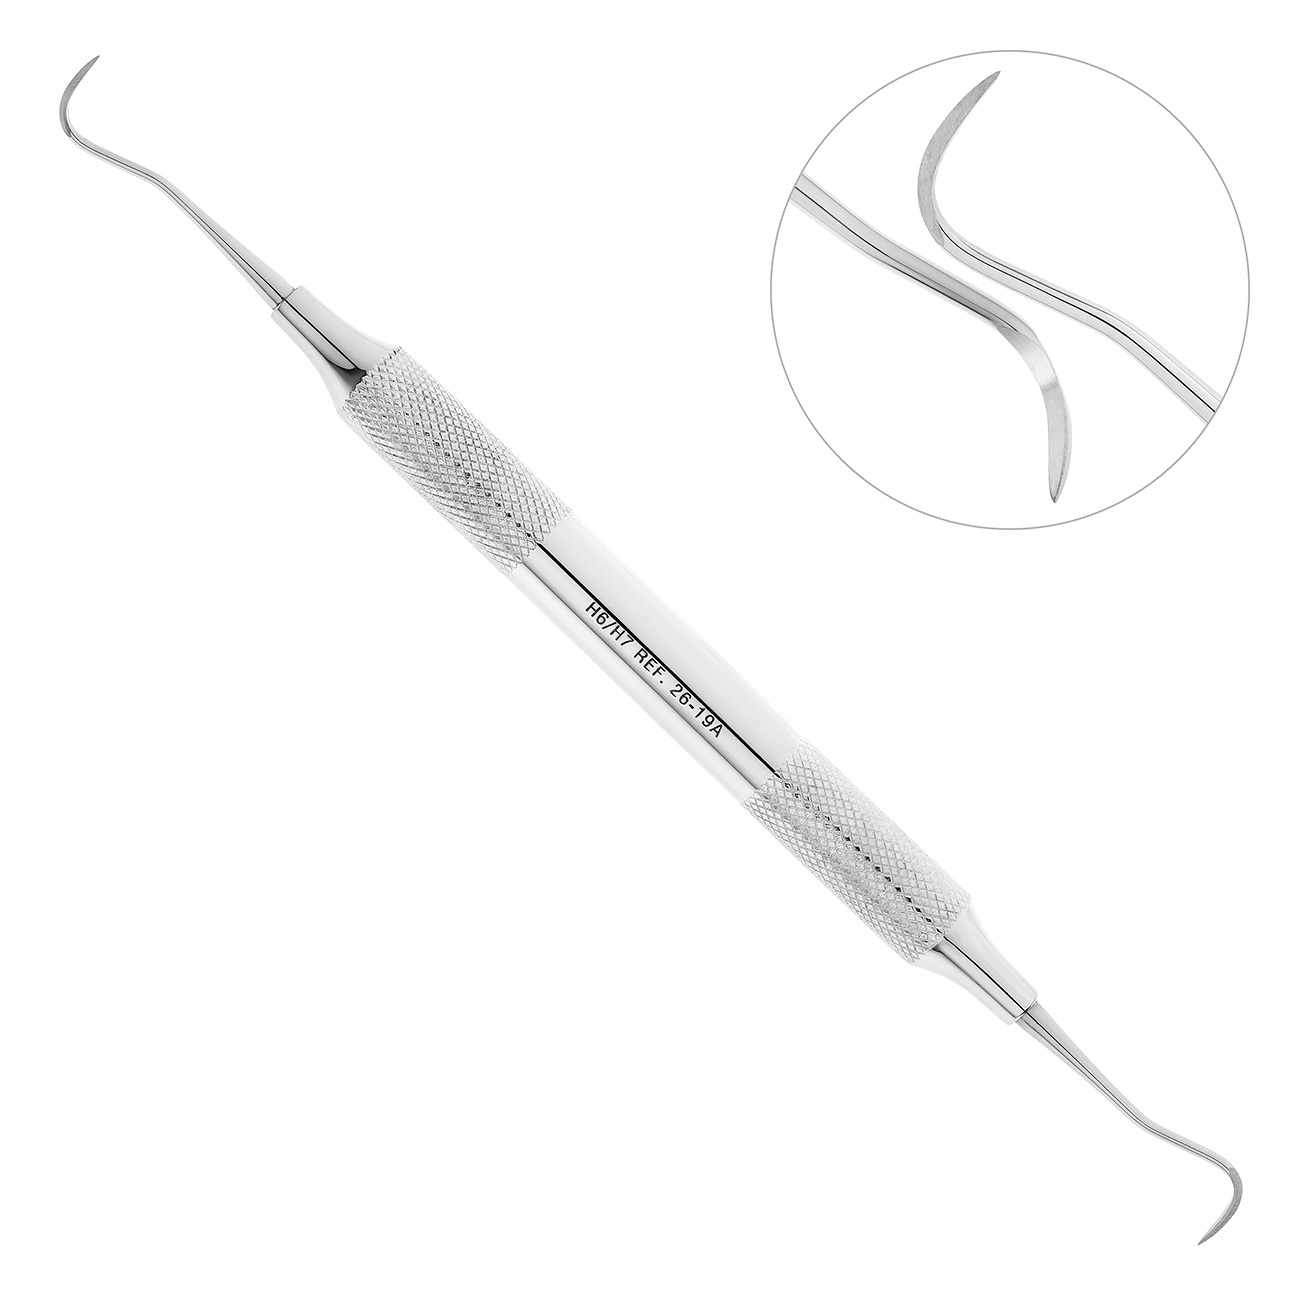 Скейлер парадонтологический, форма H6/H7, ручка CLASSIC, диаметр 10 мм, 26-19A*